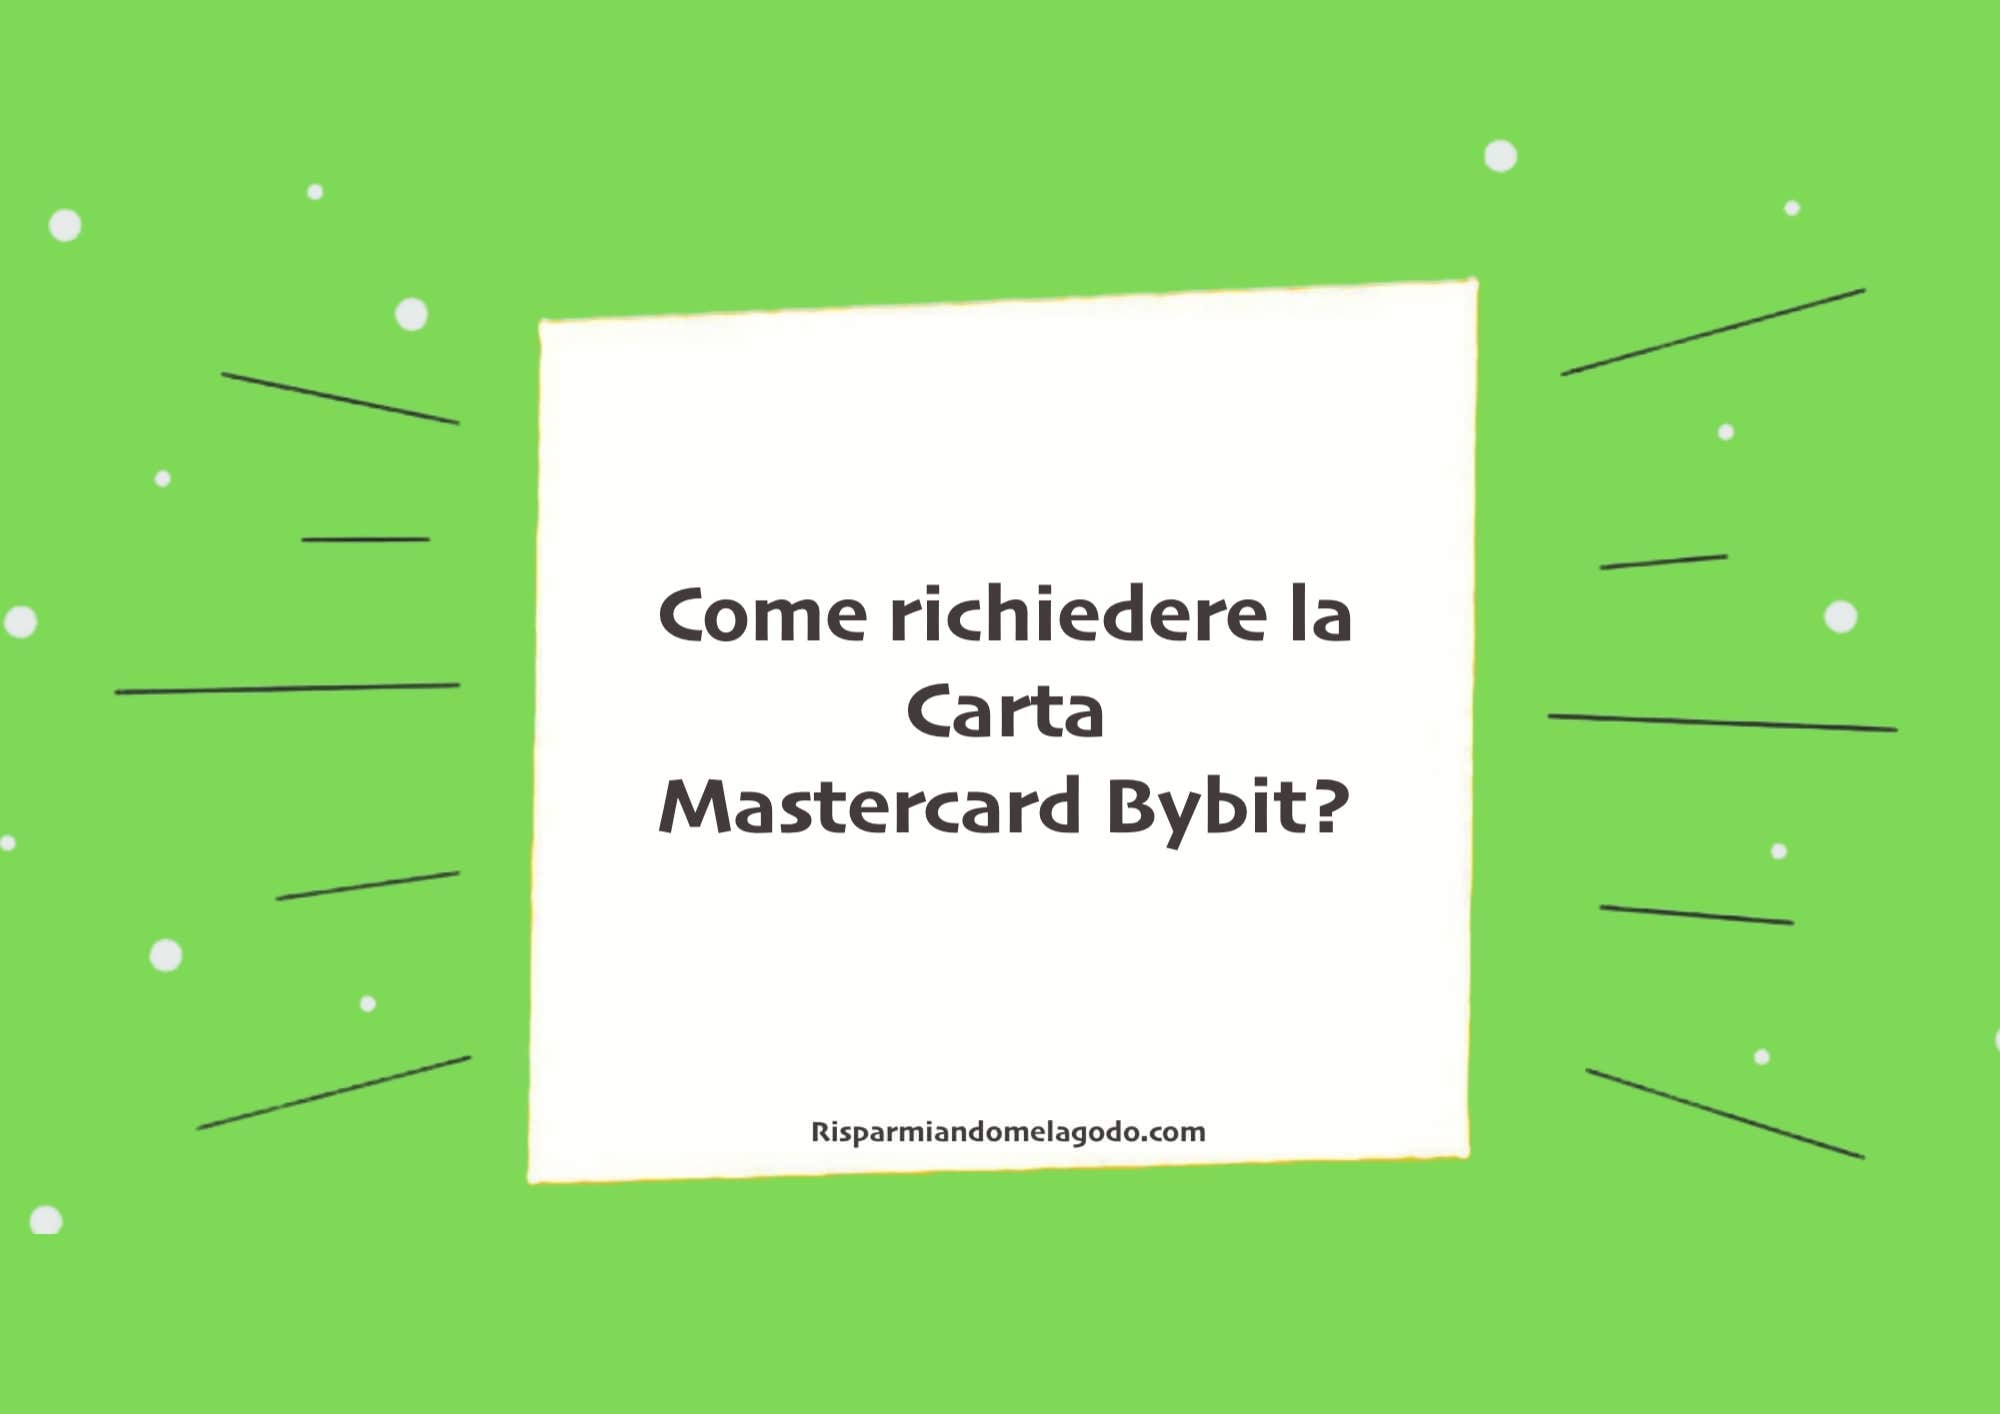 Come richiedere la Carta Mastercard Bybit?